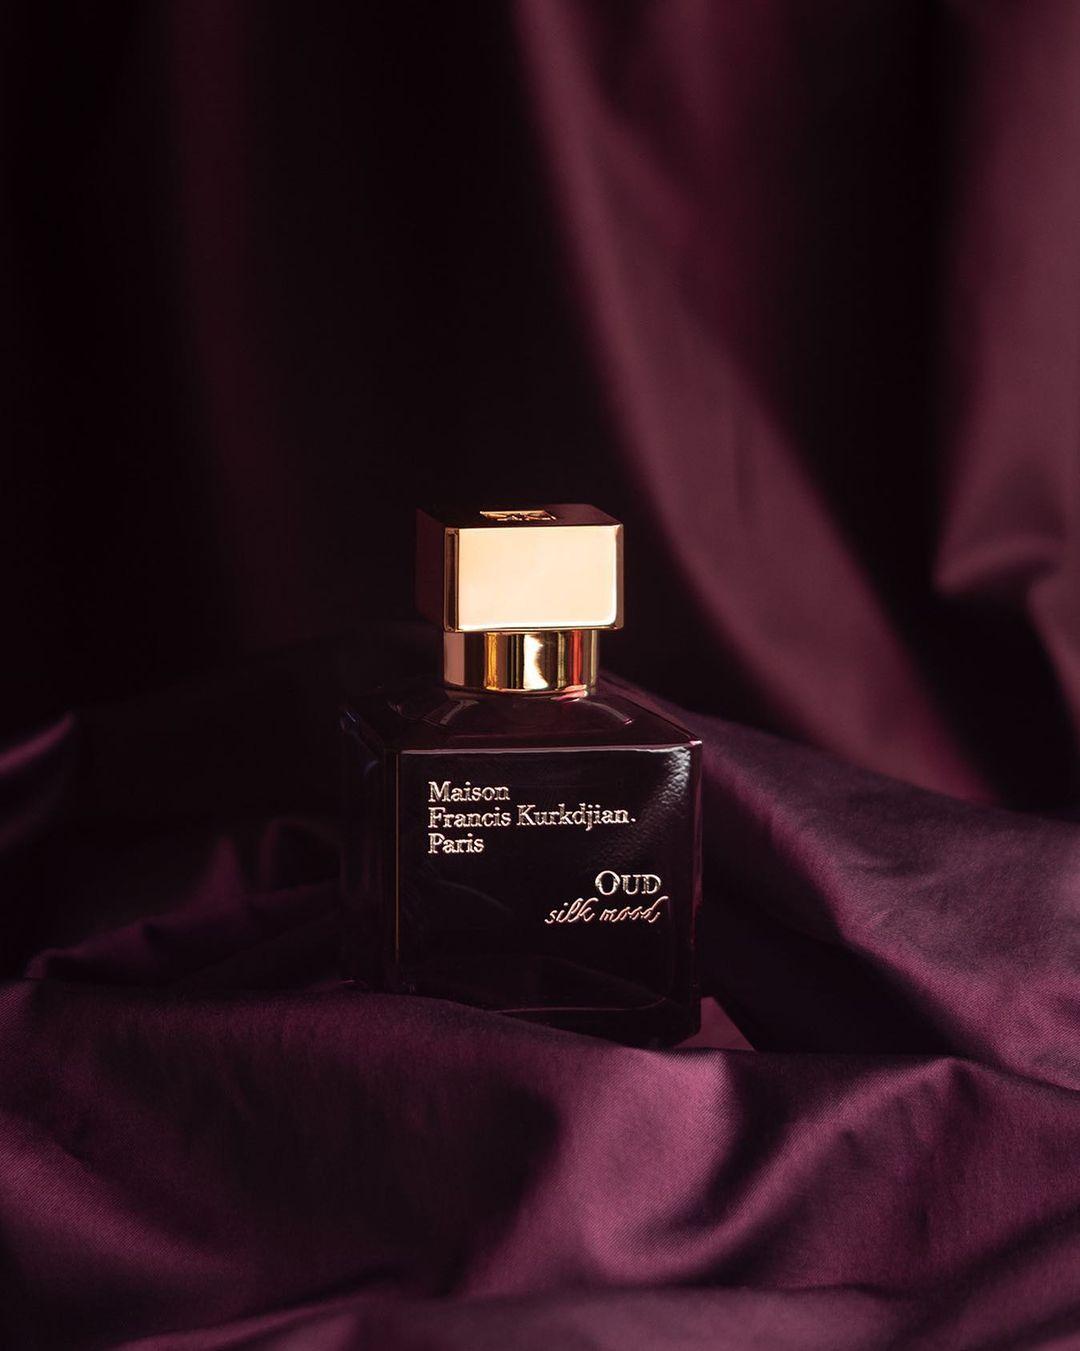 Maison Francis Kurkdjian - Oud silk mood eau de parfum 70 ml | Perfume Lounge